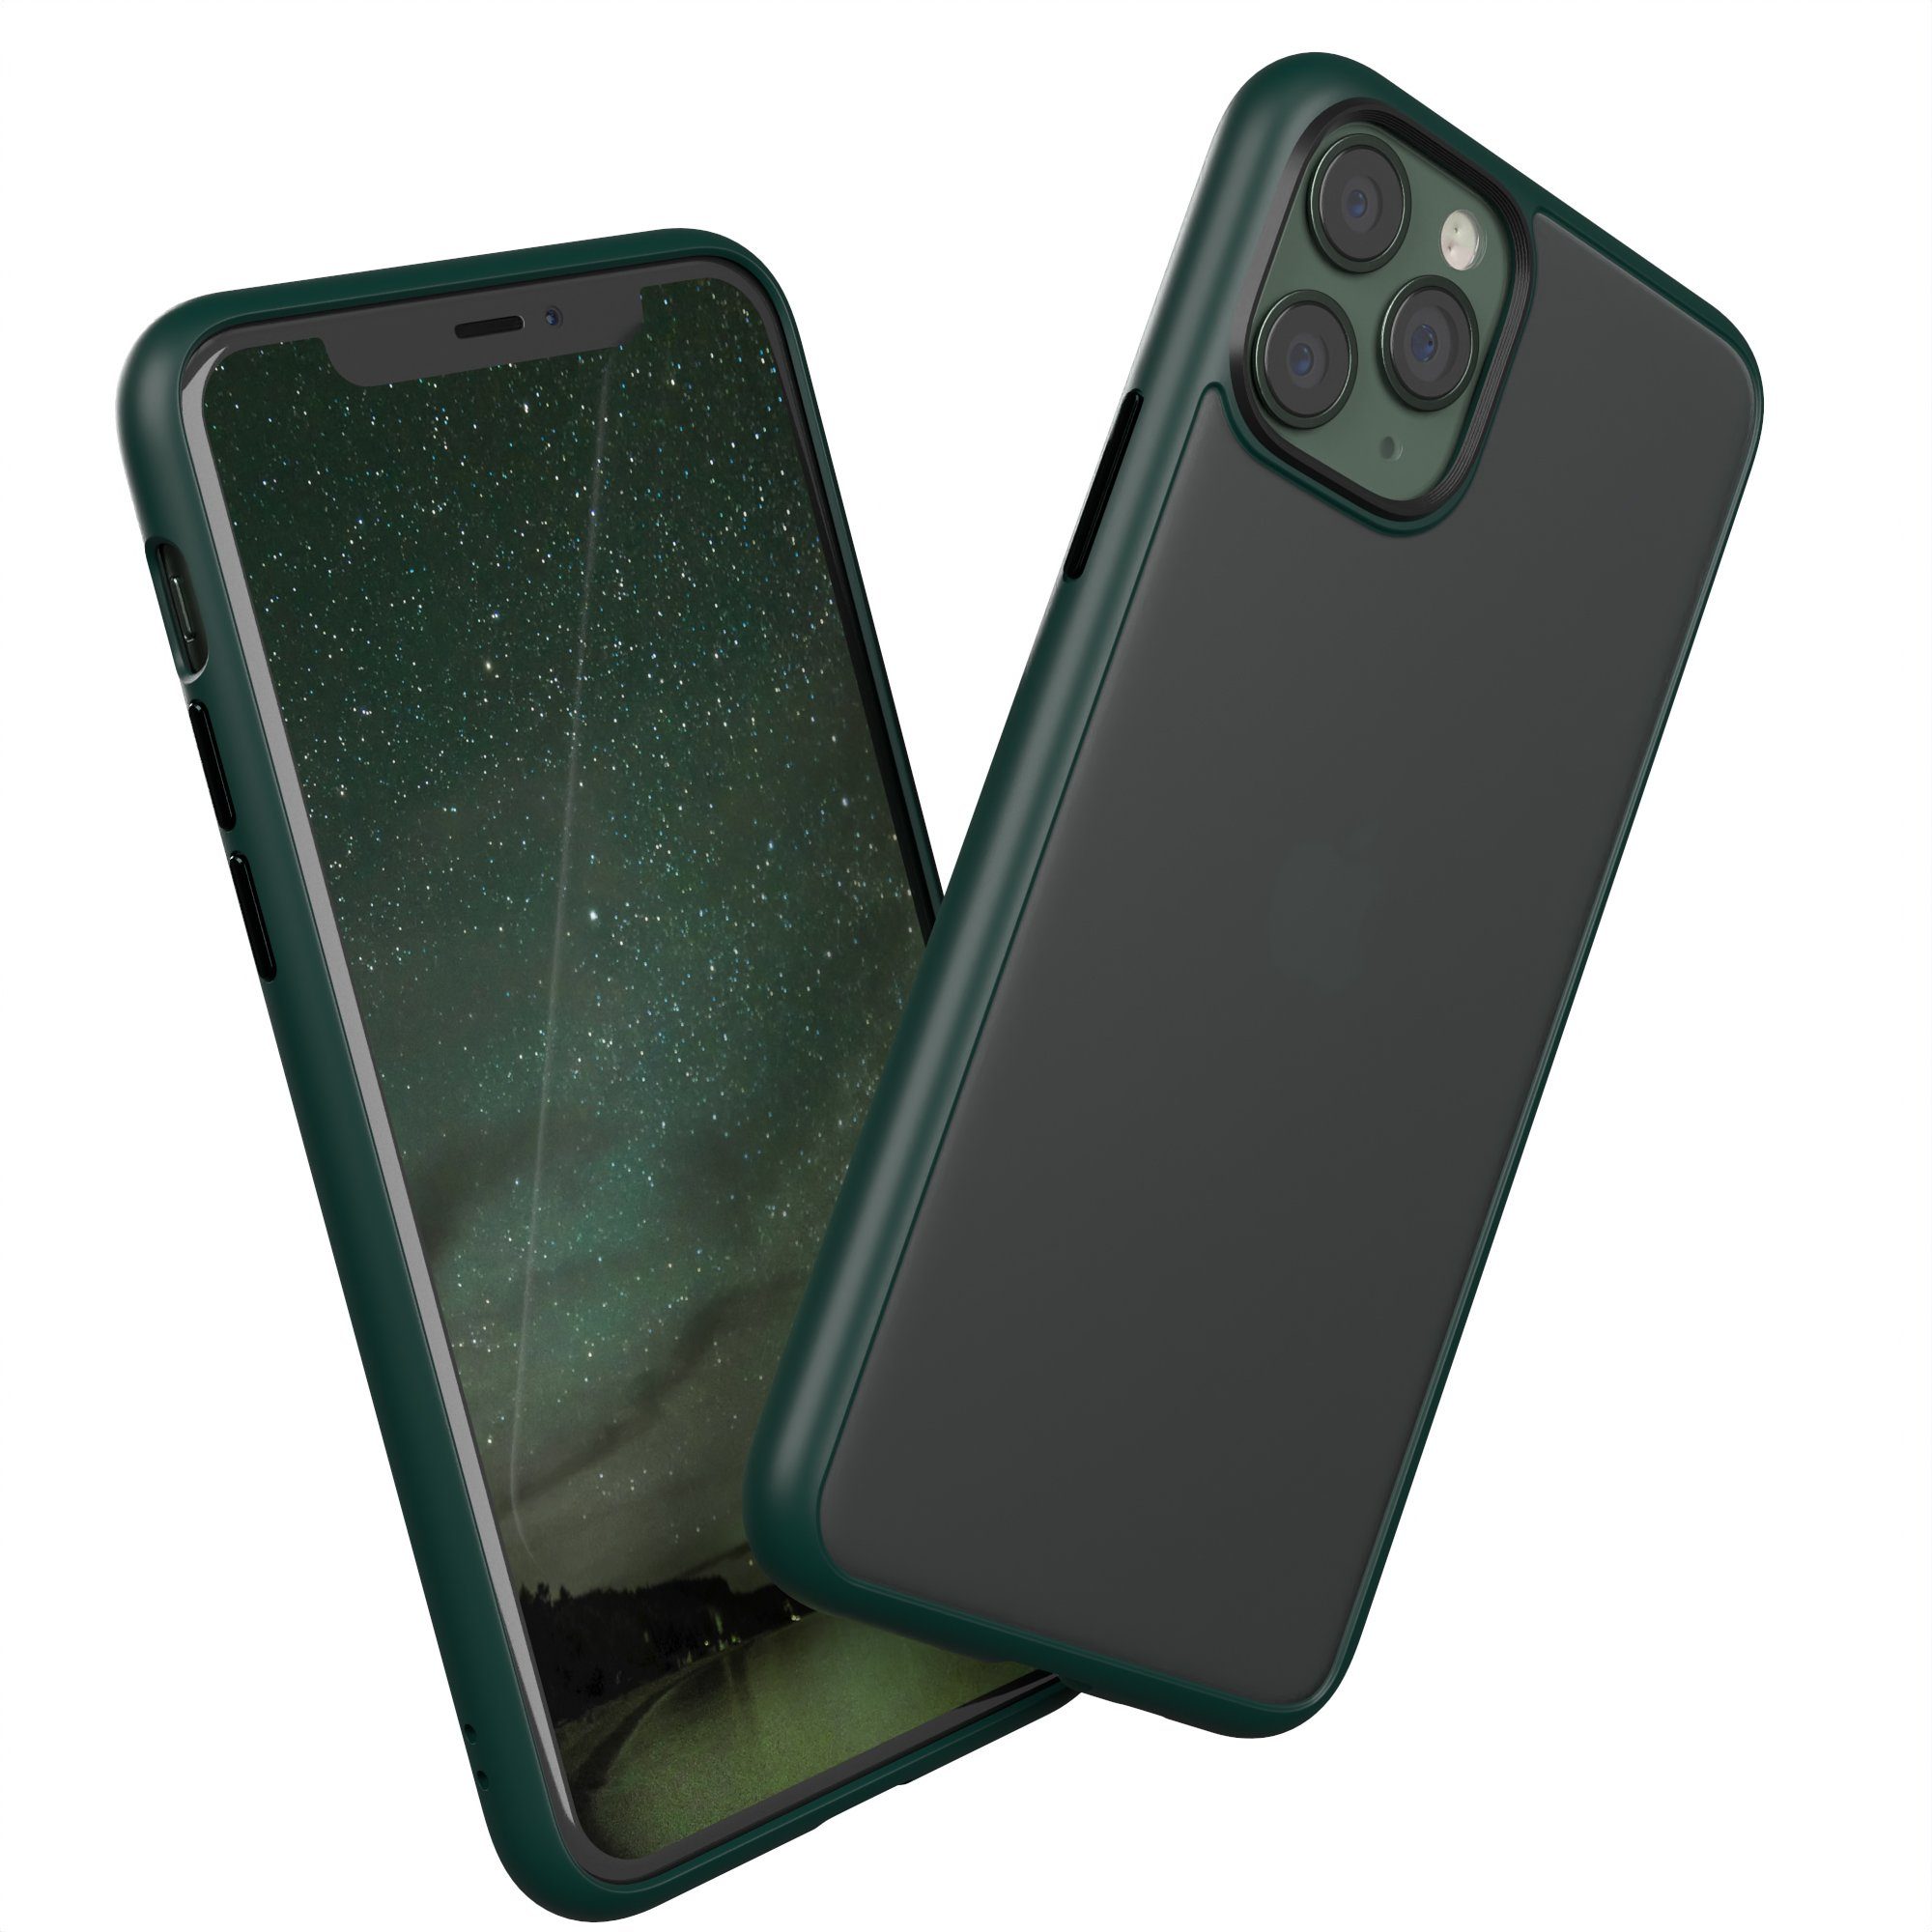 EAZY CASE Handyhülle Outdoor Case für Apple iPhone 11 Pro 5,8 Zoll, Slim Cover Durchsichtig Robust Back Cover stoßfest Grün / Nachtgrün